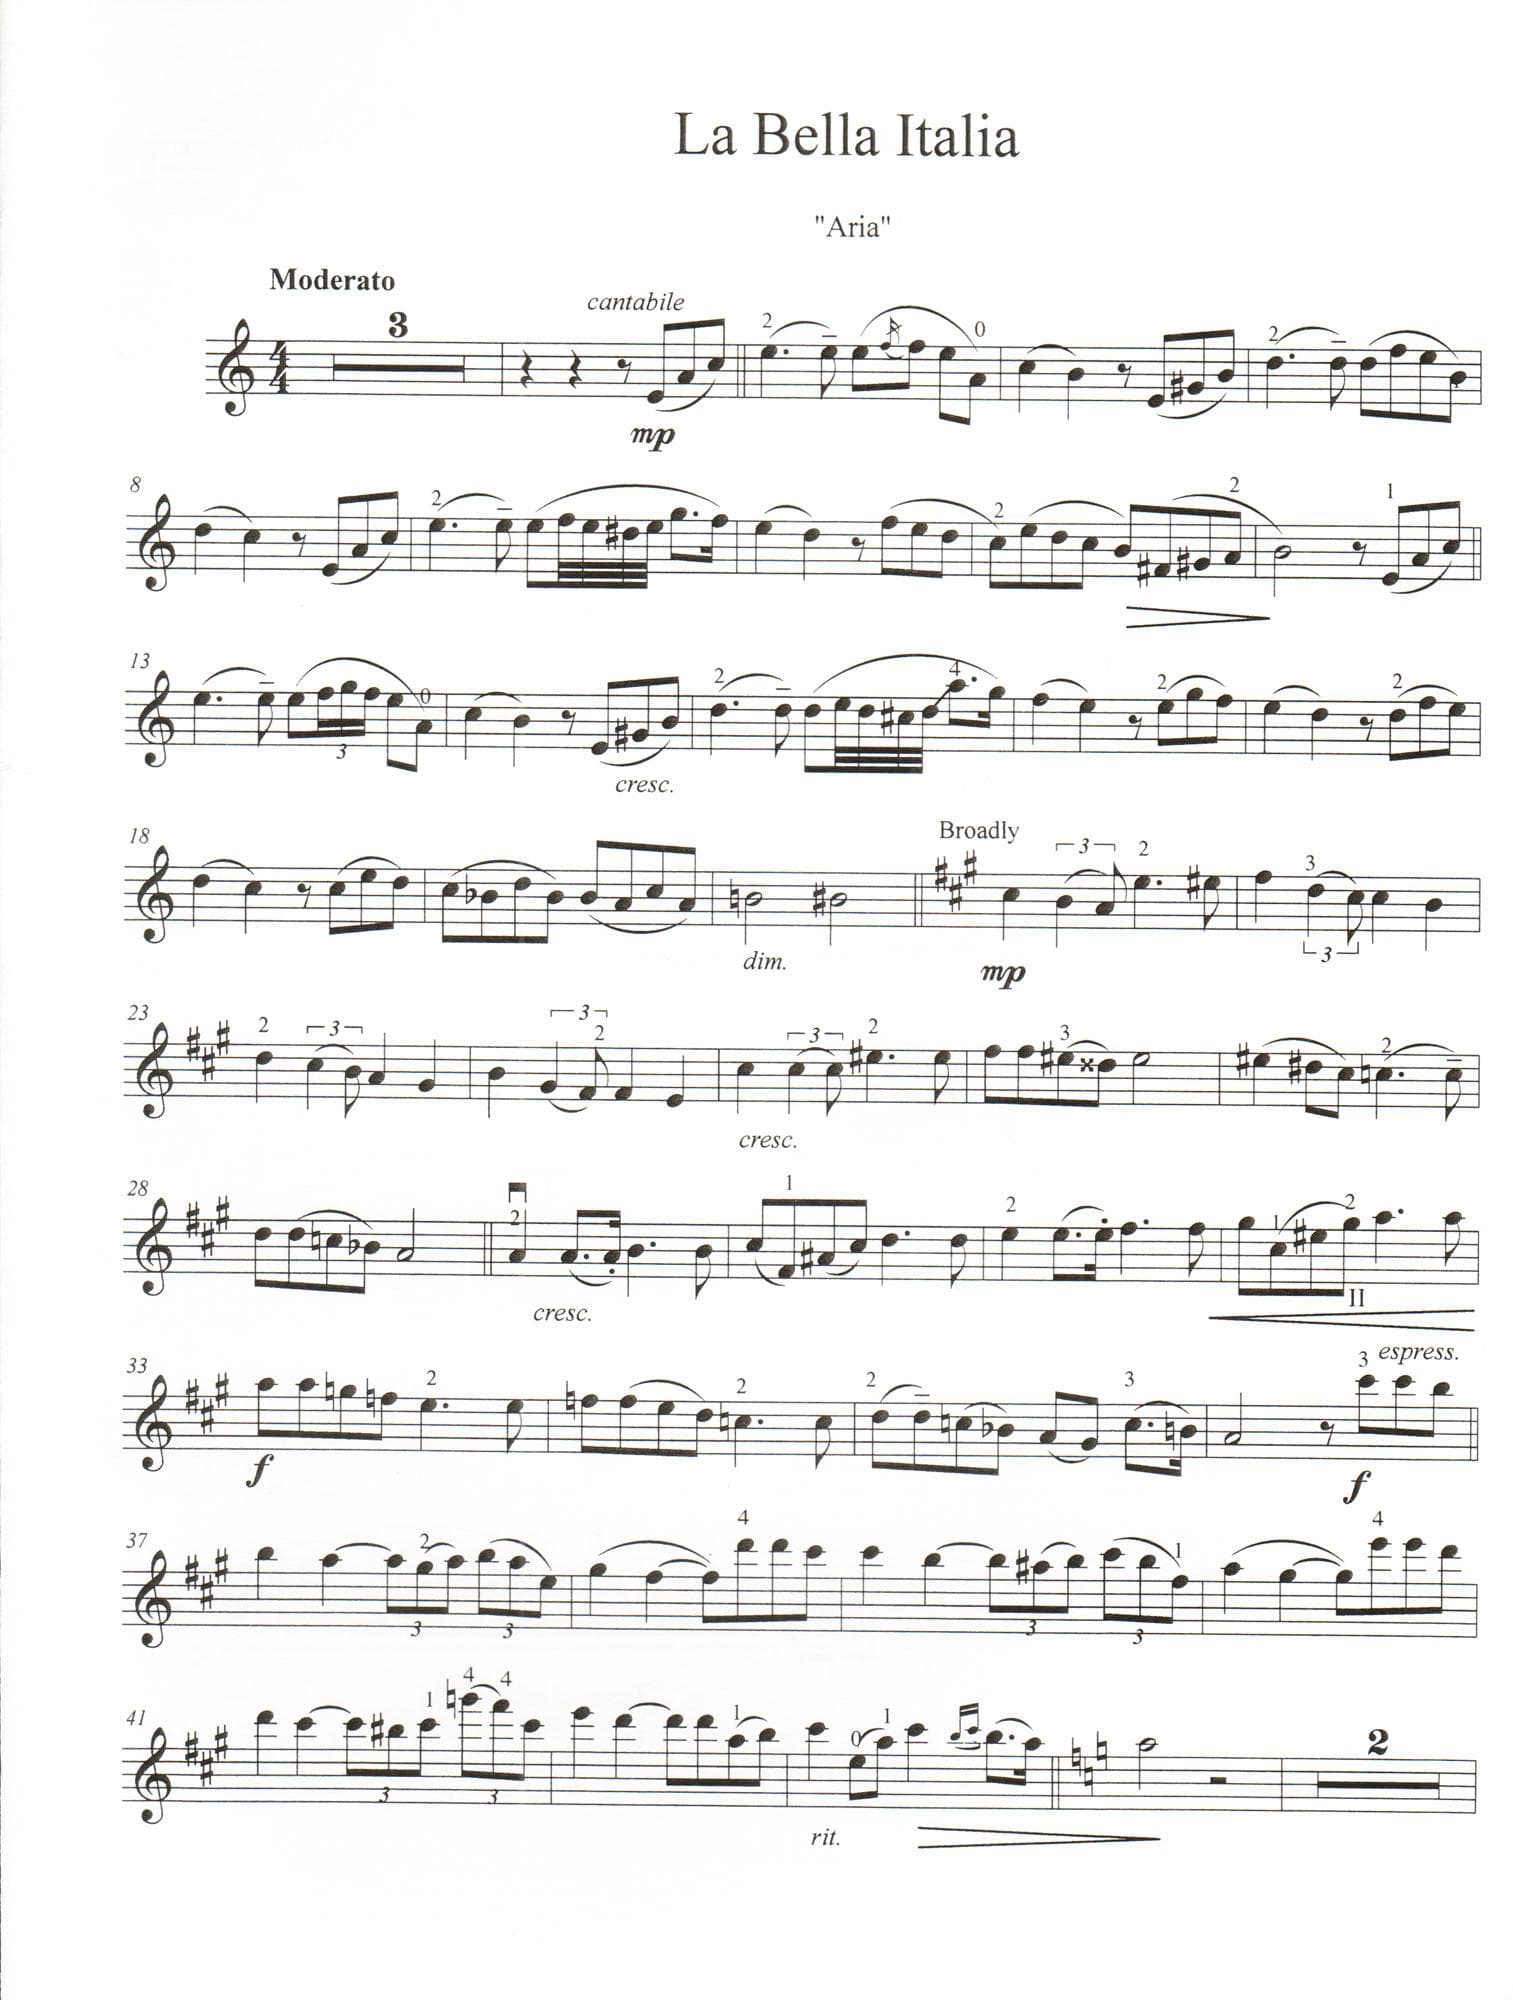 Khanagov, Karén - La Bella Italia - Italy from Parade of Nations - for Violin and Piano - Hanaga Publication